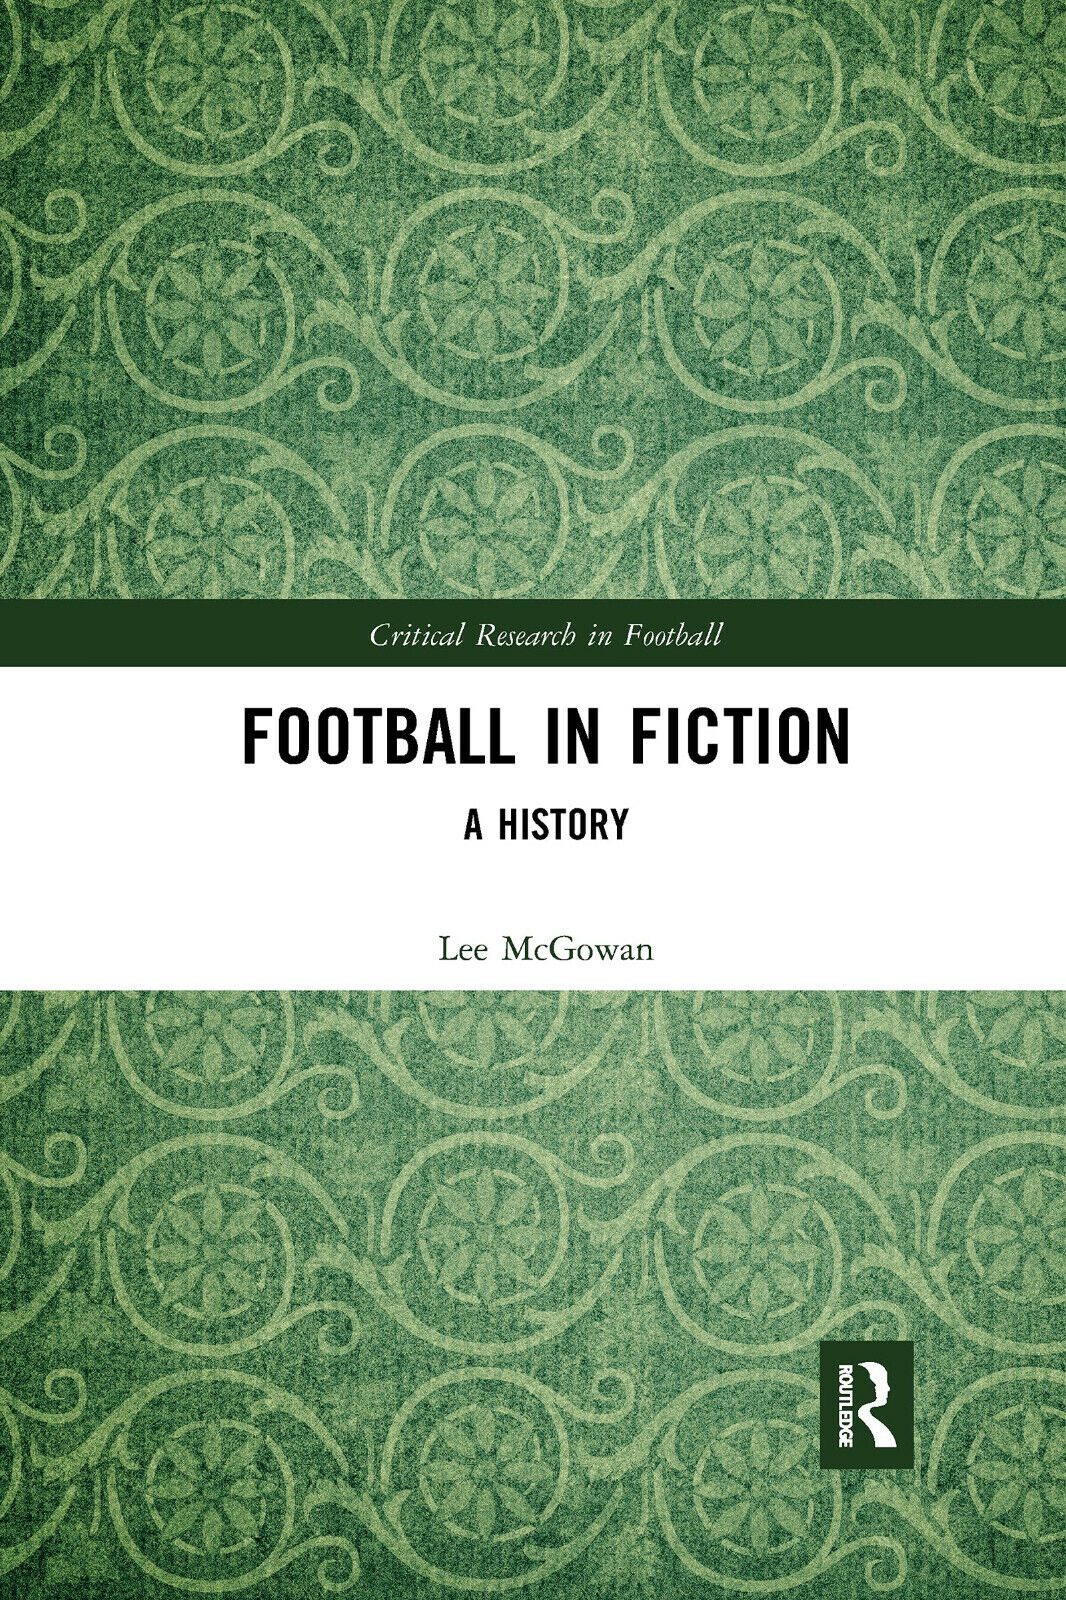 Football in Fiction: A History - Lee McGowan - Taylor & Francis, 2021